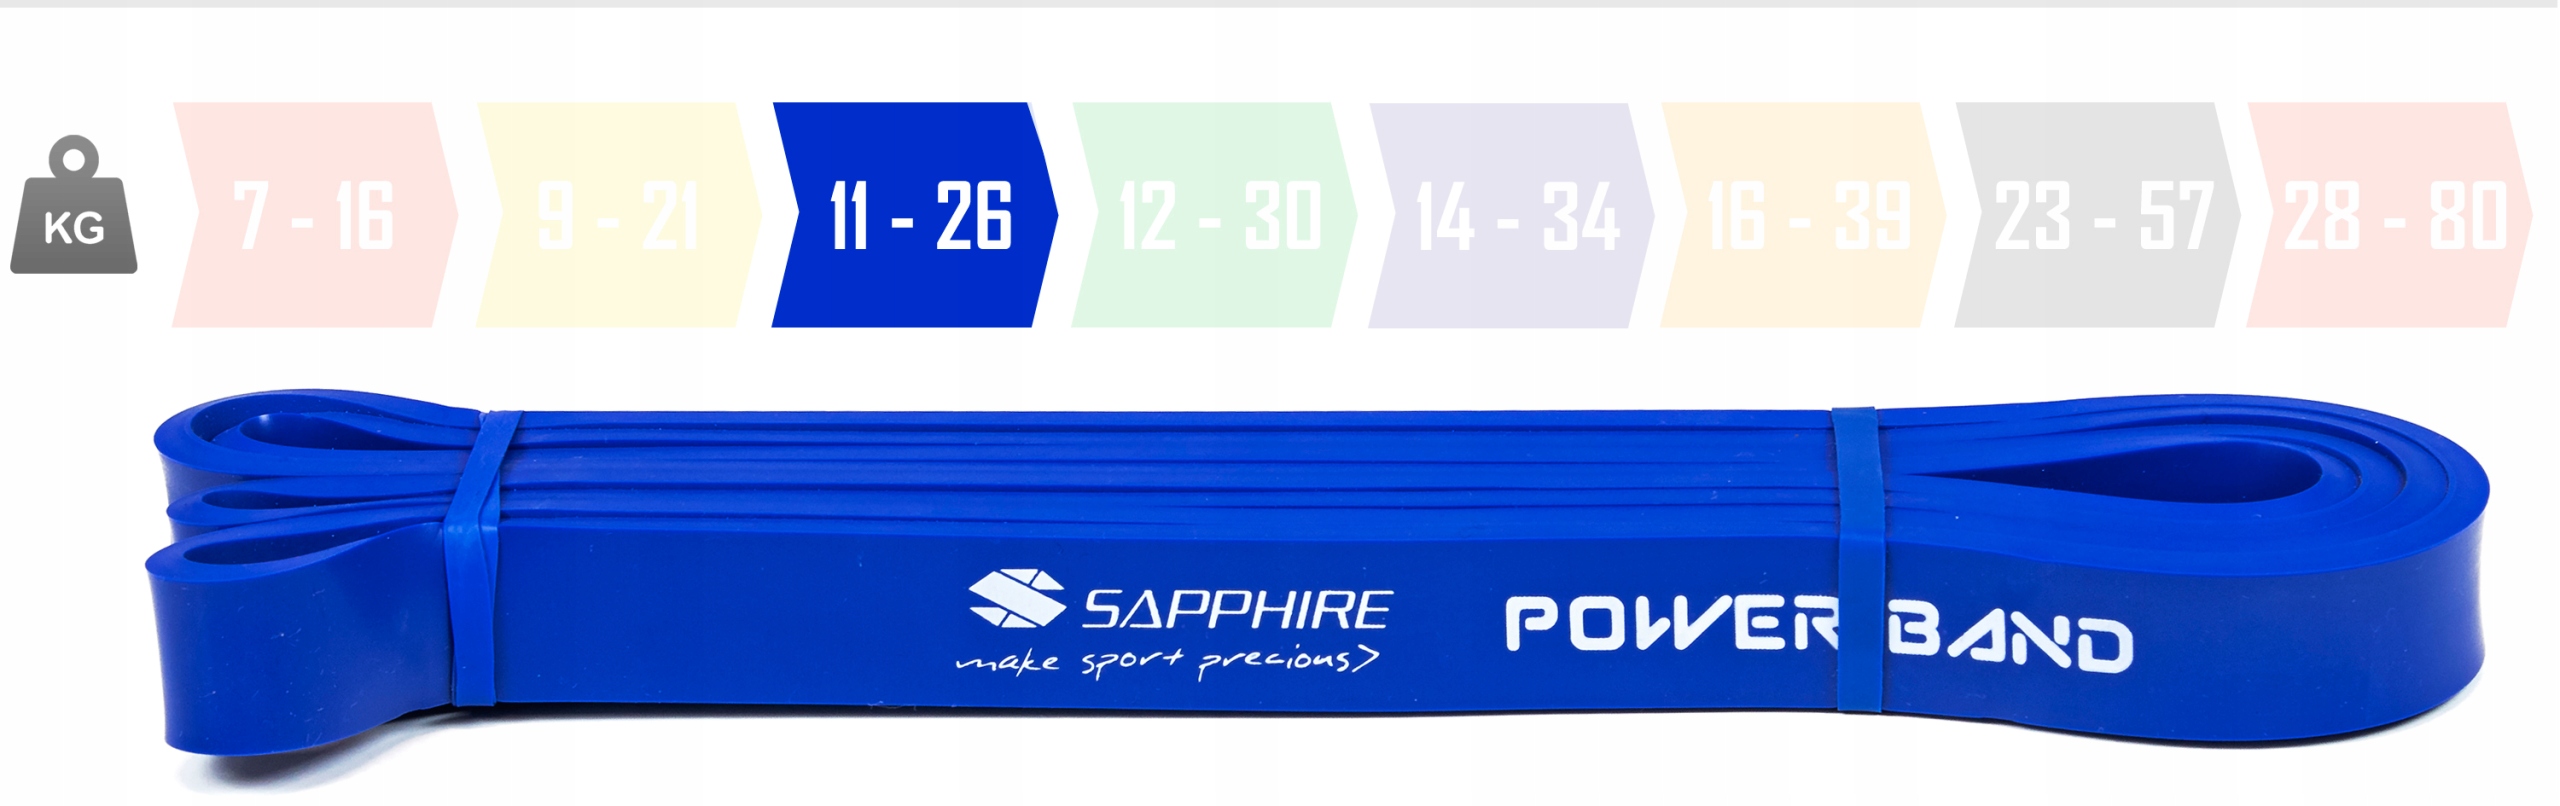 Zestaw gum Sapphire Power Band - 4 sztuki, pakiet EASY